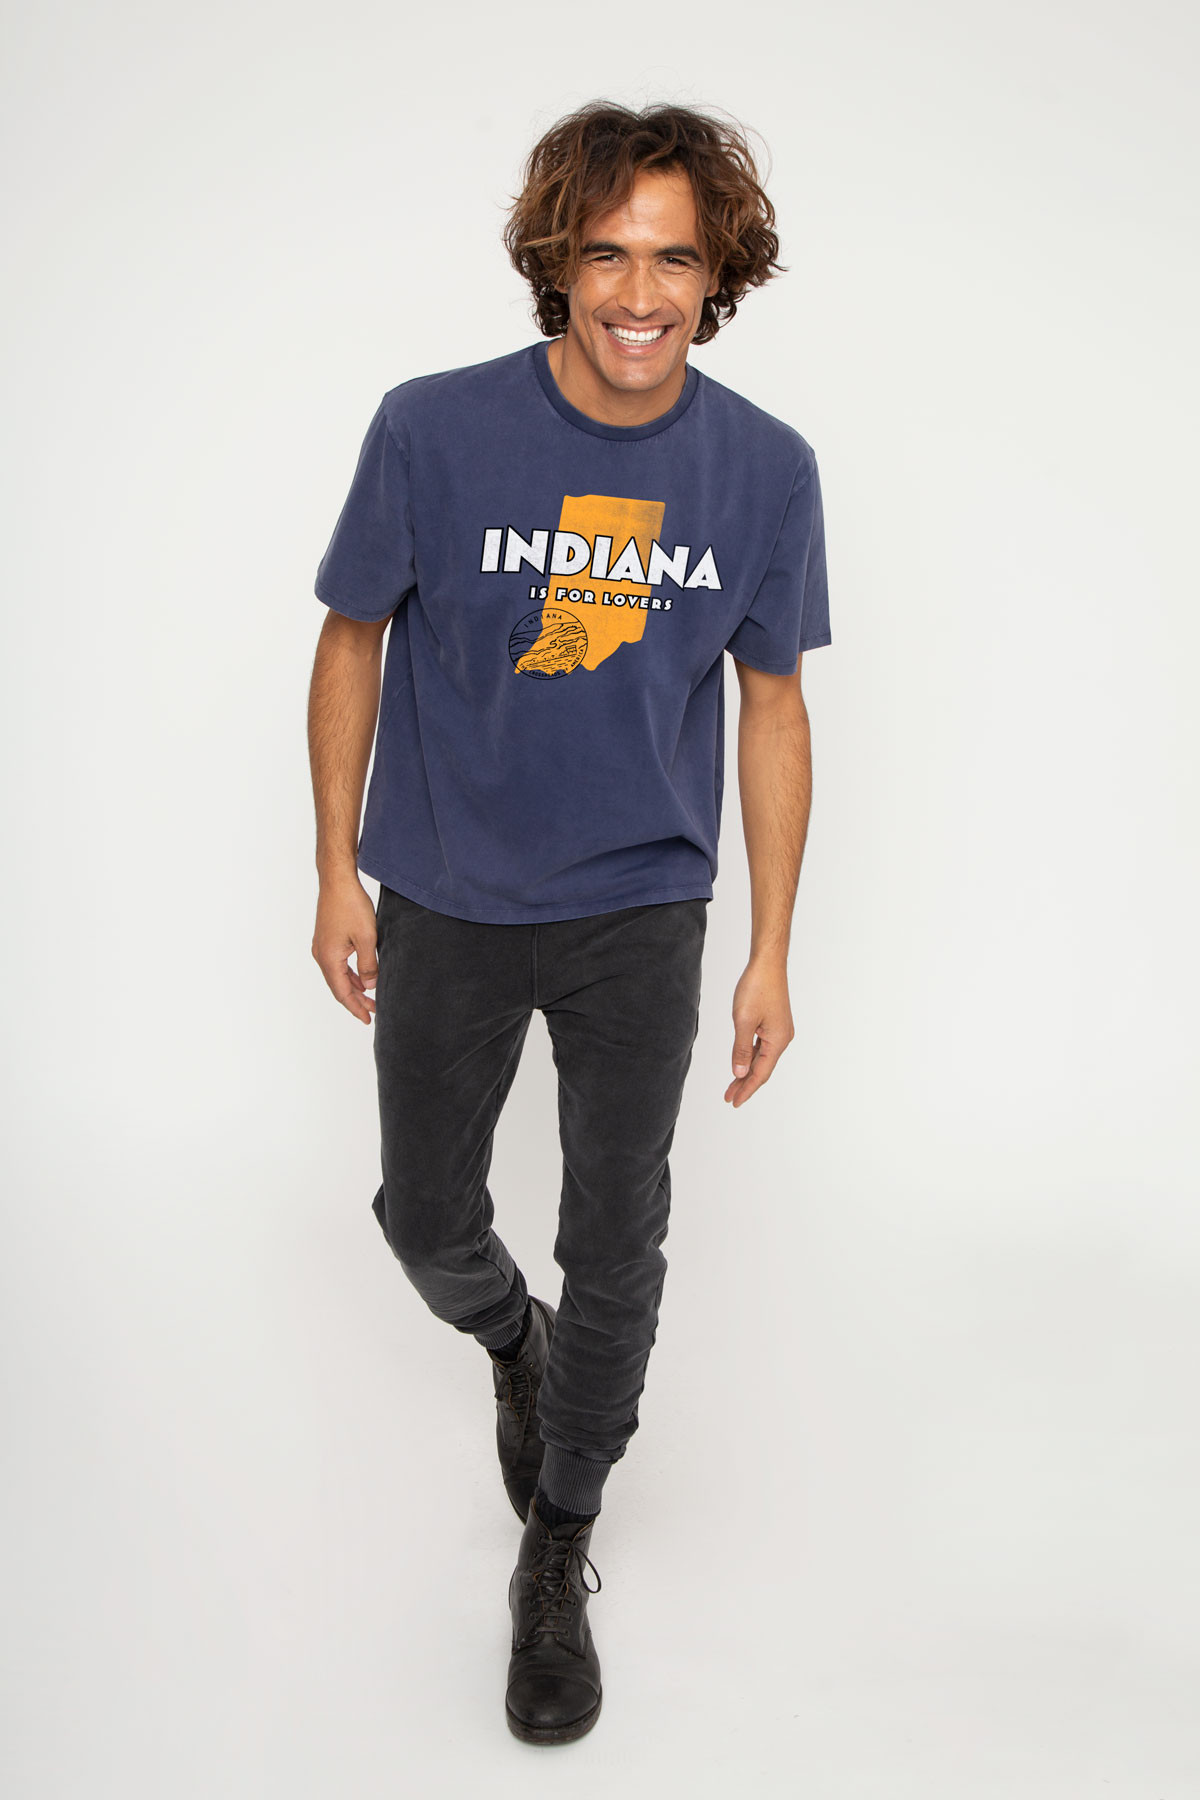 Tshirt Mike Washed INDIANA (Print)